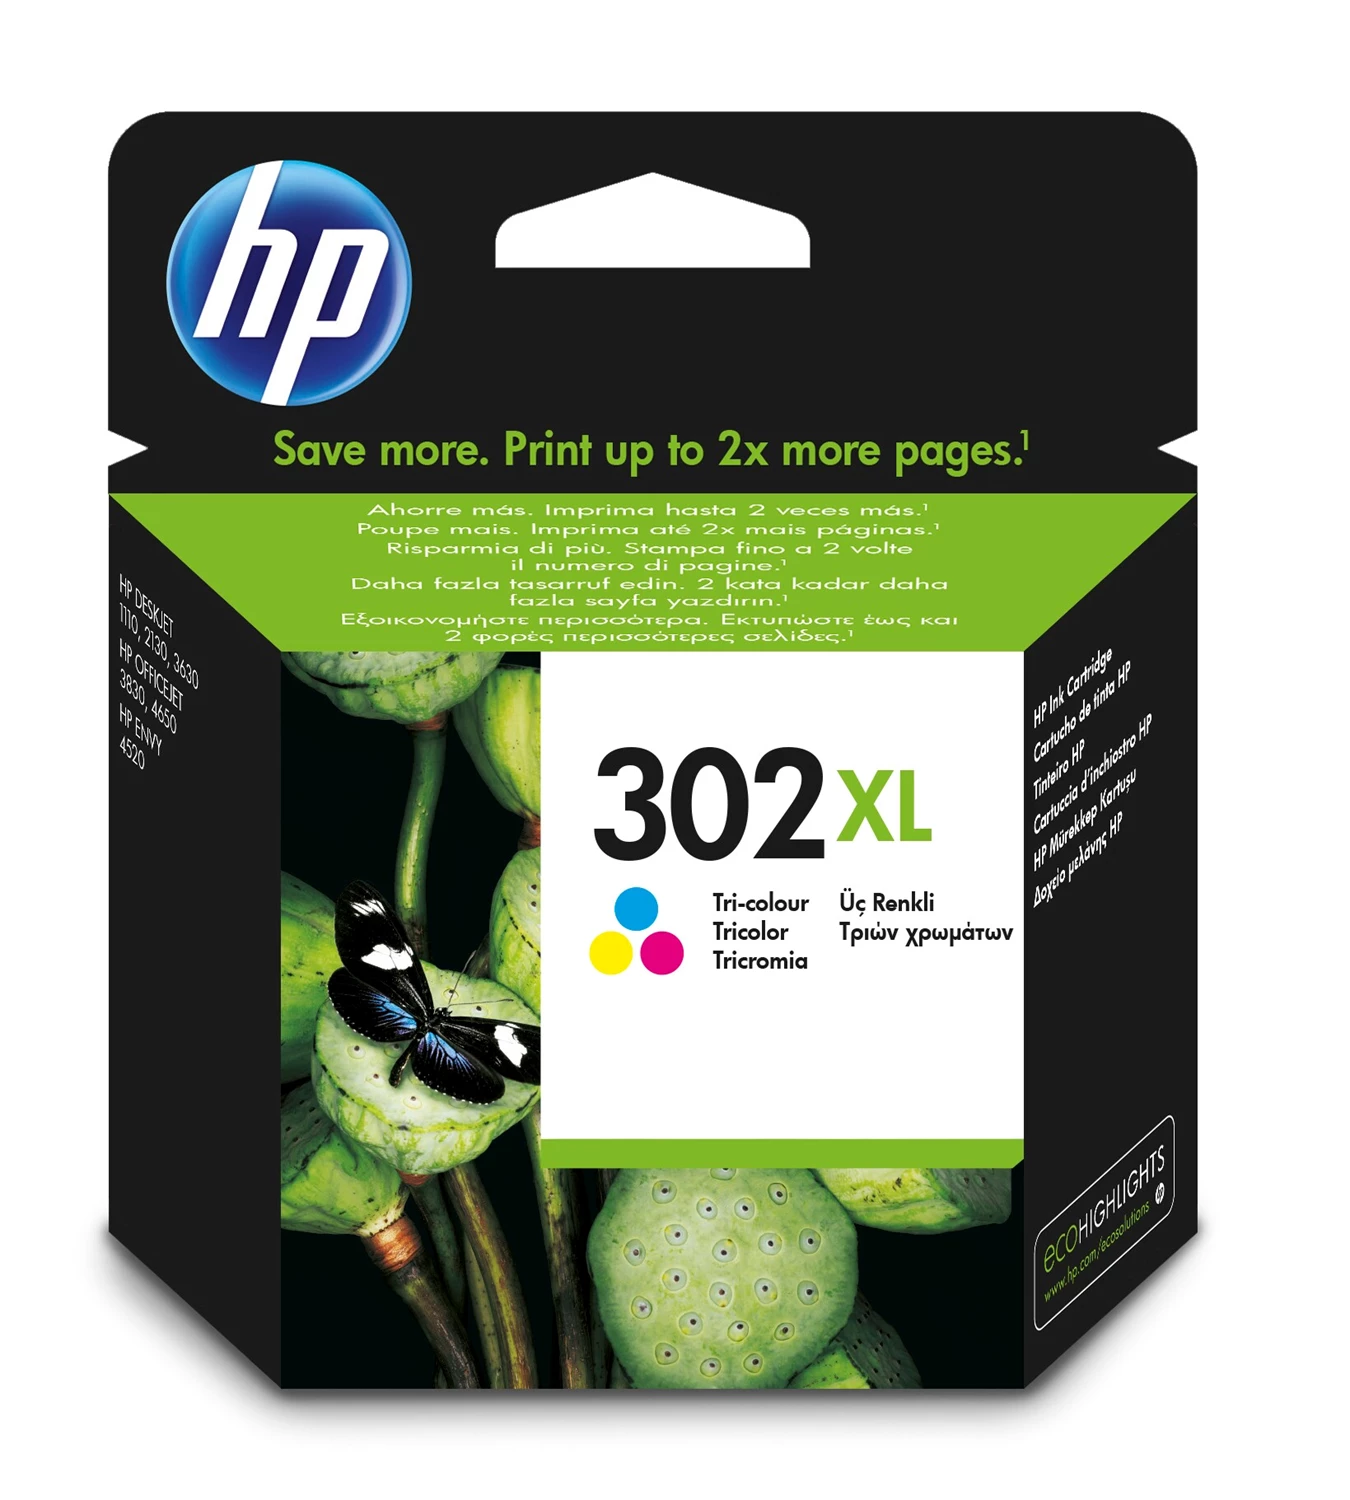 HP No302 XL color ink cartridge